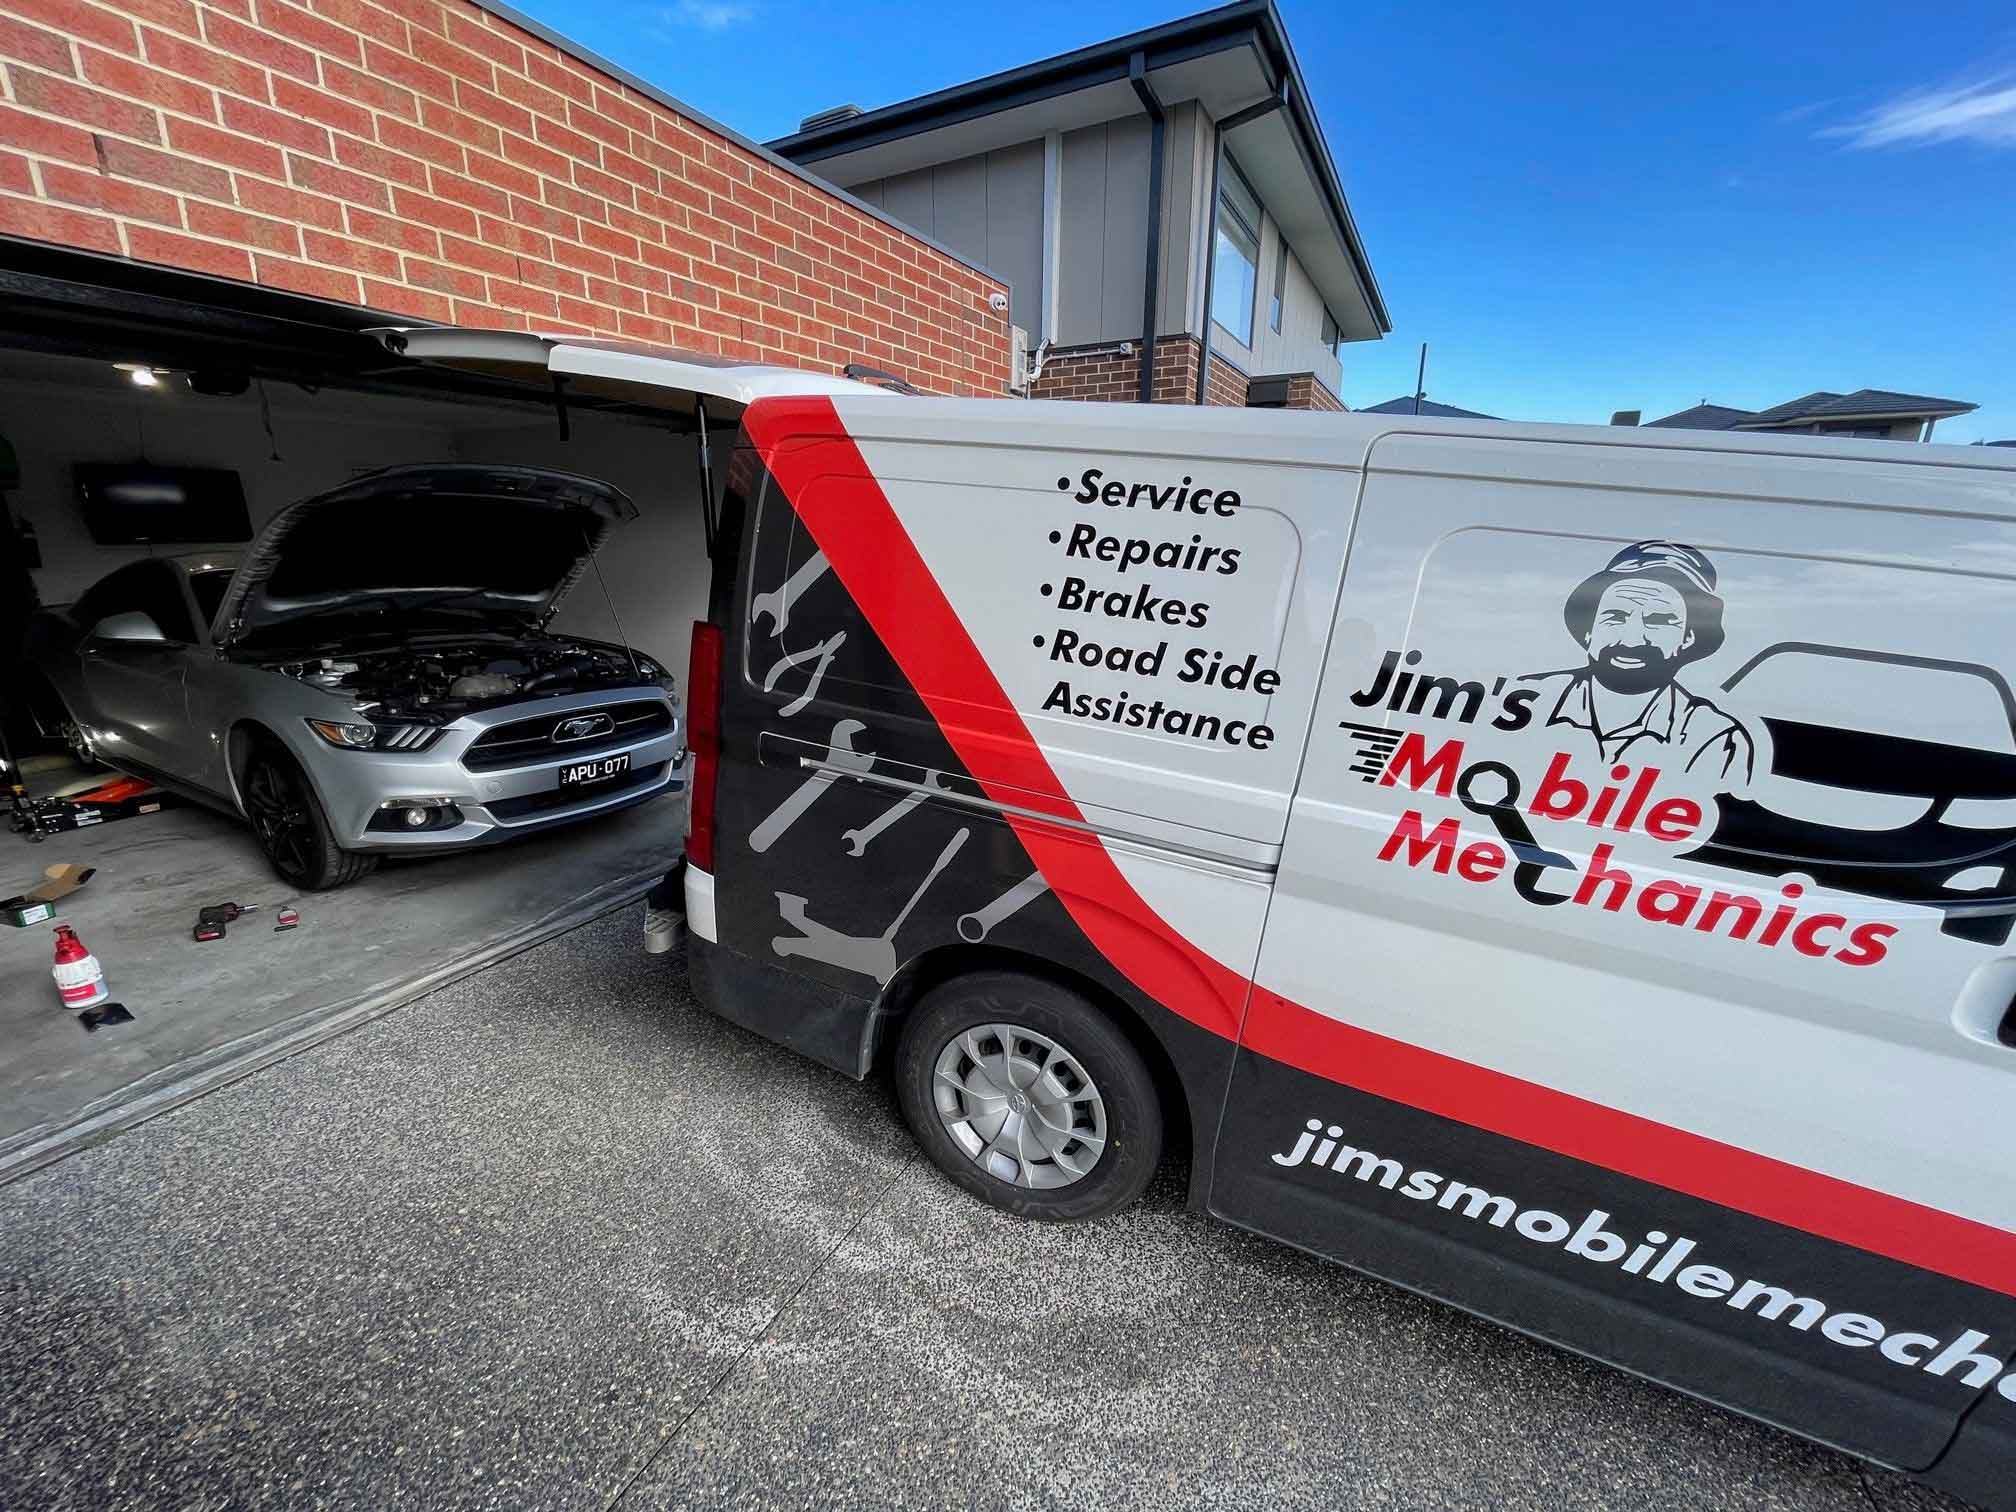 Jims mobile mechanics auto mechanics near me sydney